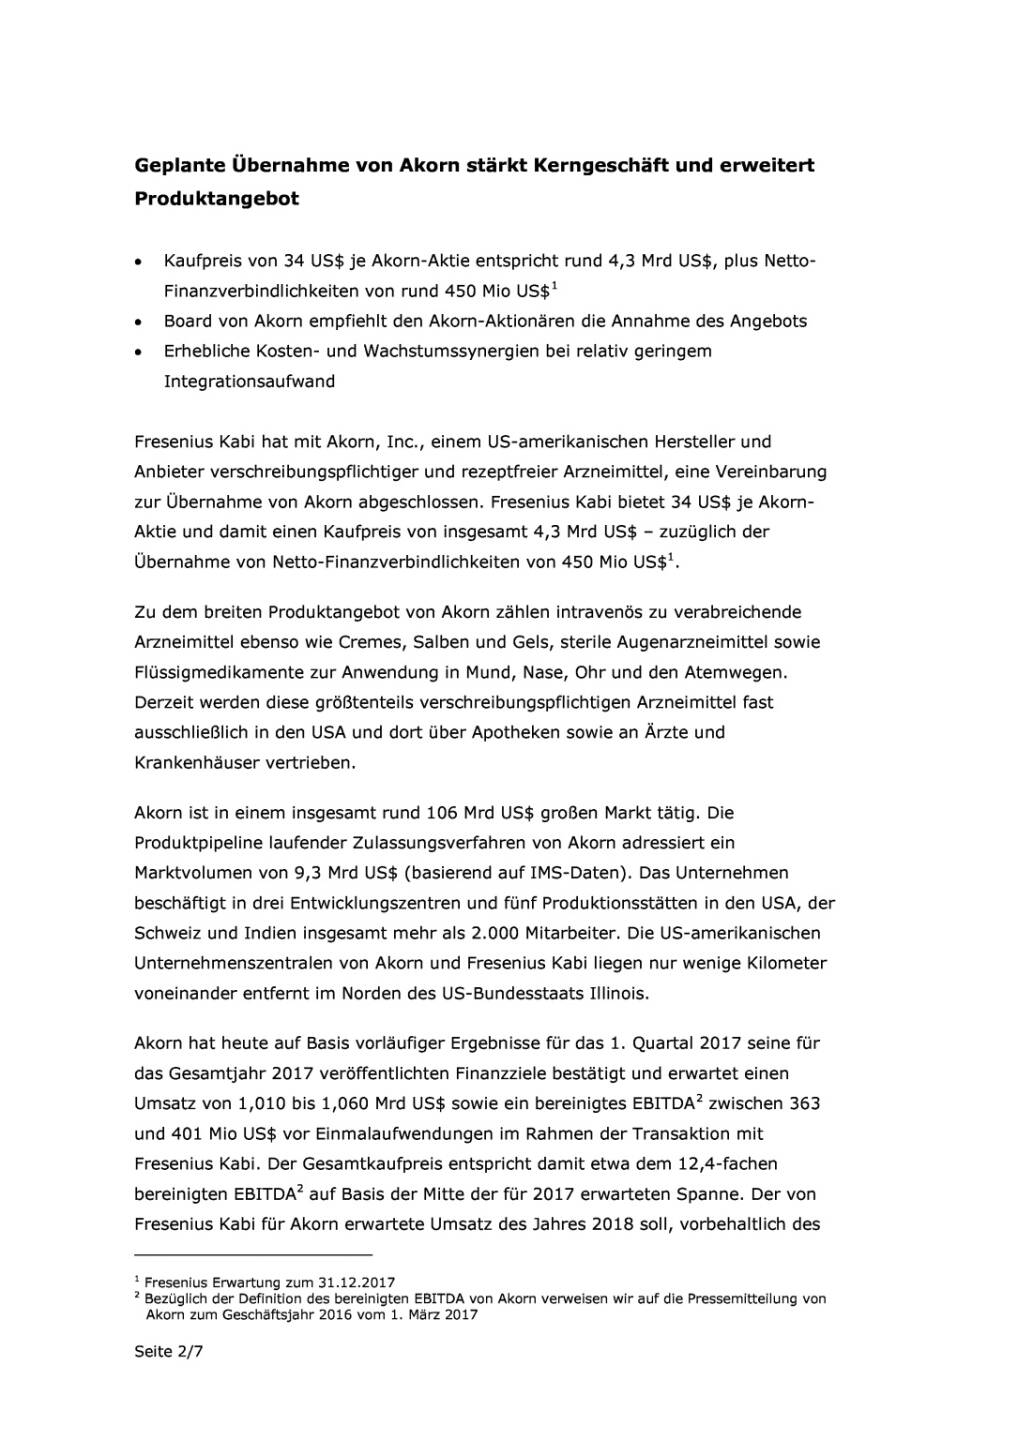 Fresenius Übernahmen, Seite 2/7, komplettes Dokument unter http://boerse-social.com/static/uploads/file_2218_fresenius_ubernahmen.pdf